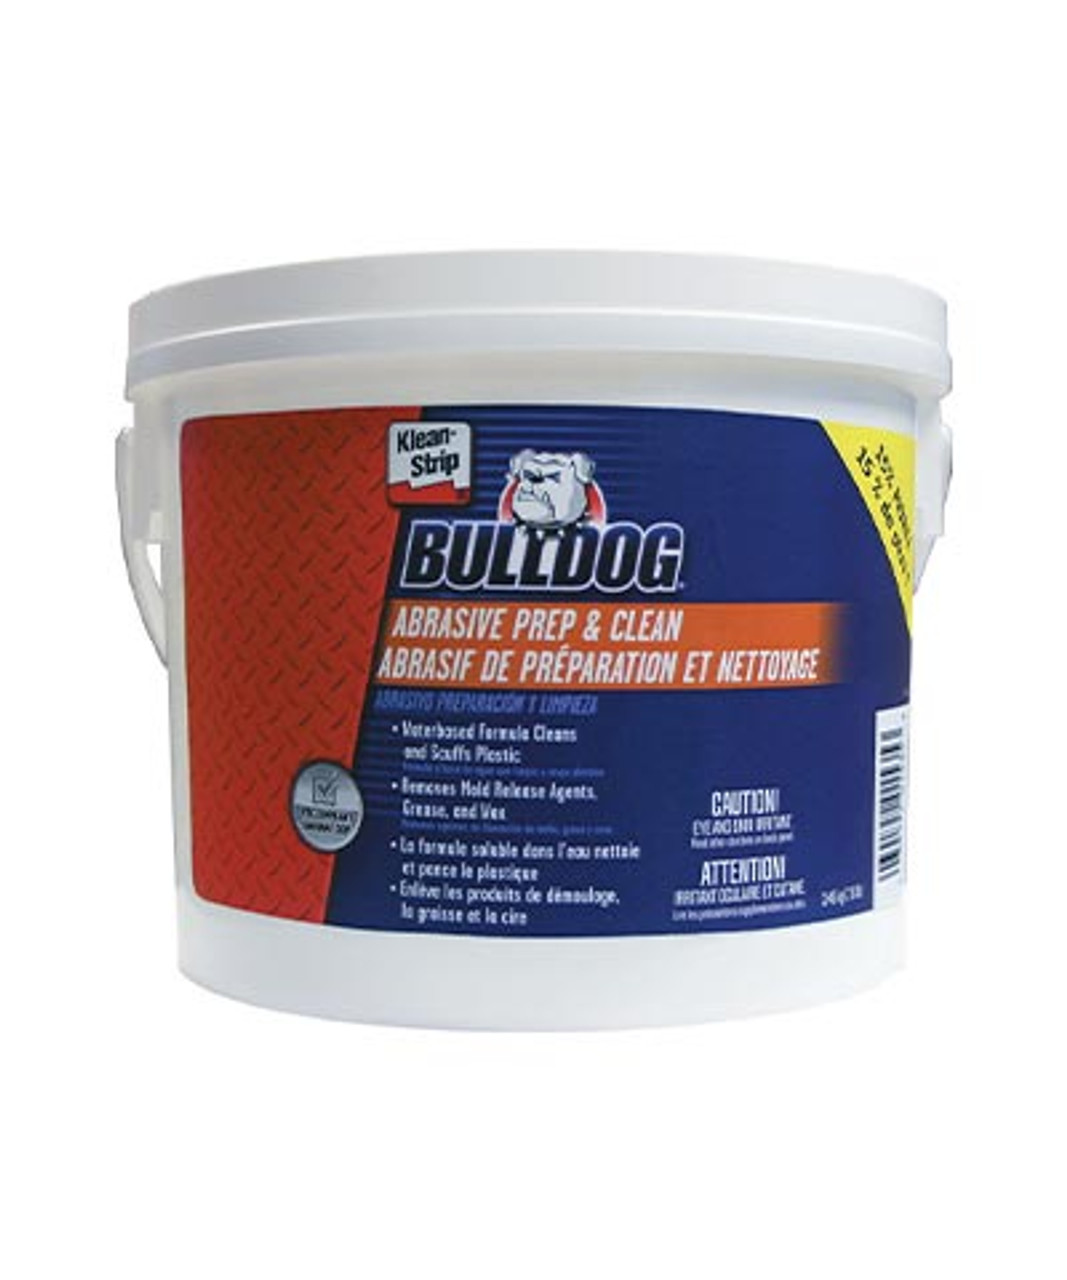 Bulldog Abrasive Prep & Clean 3.45Kg